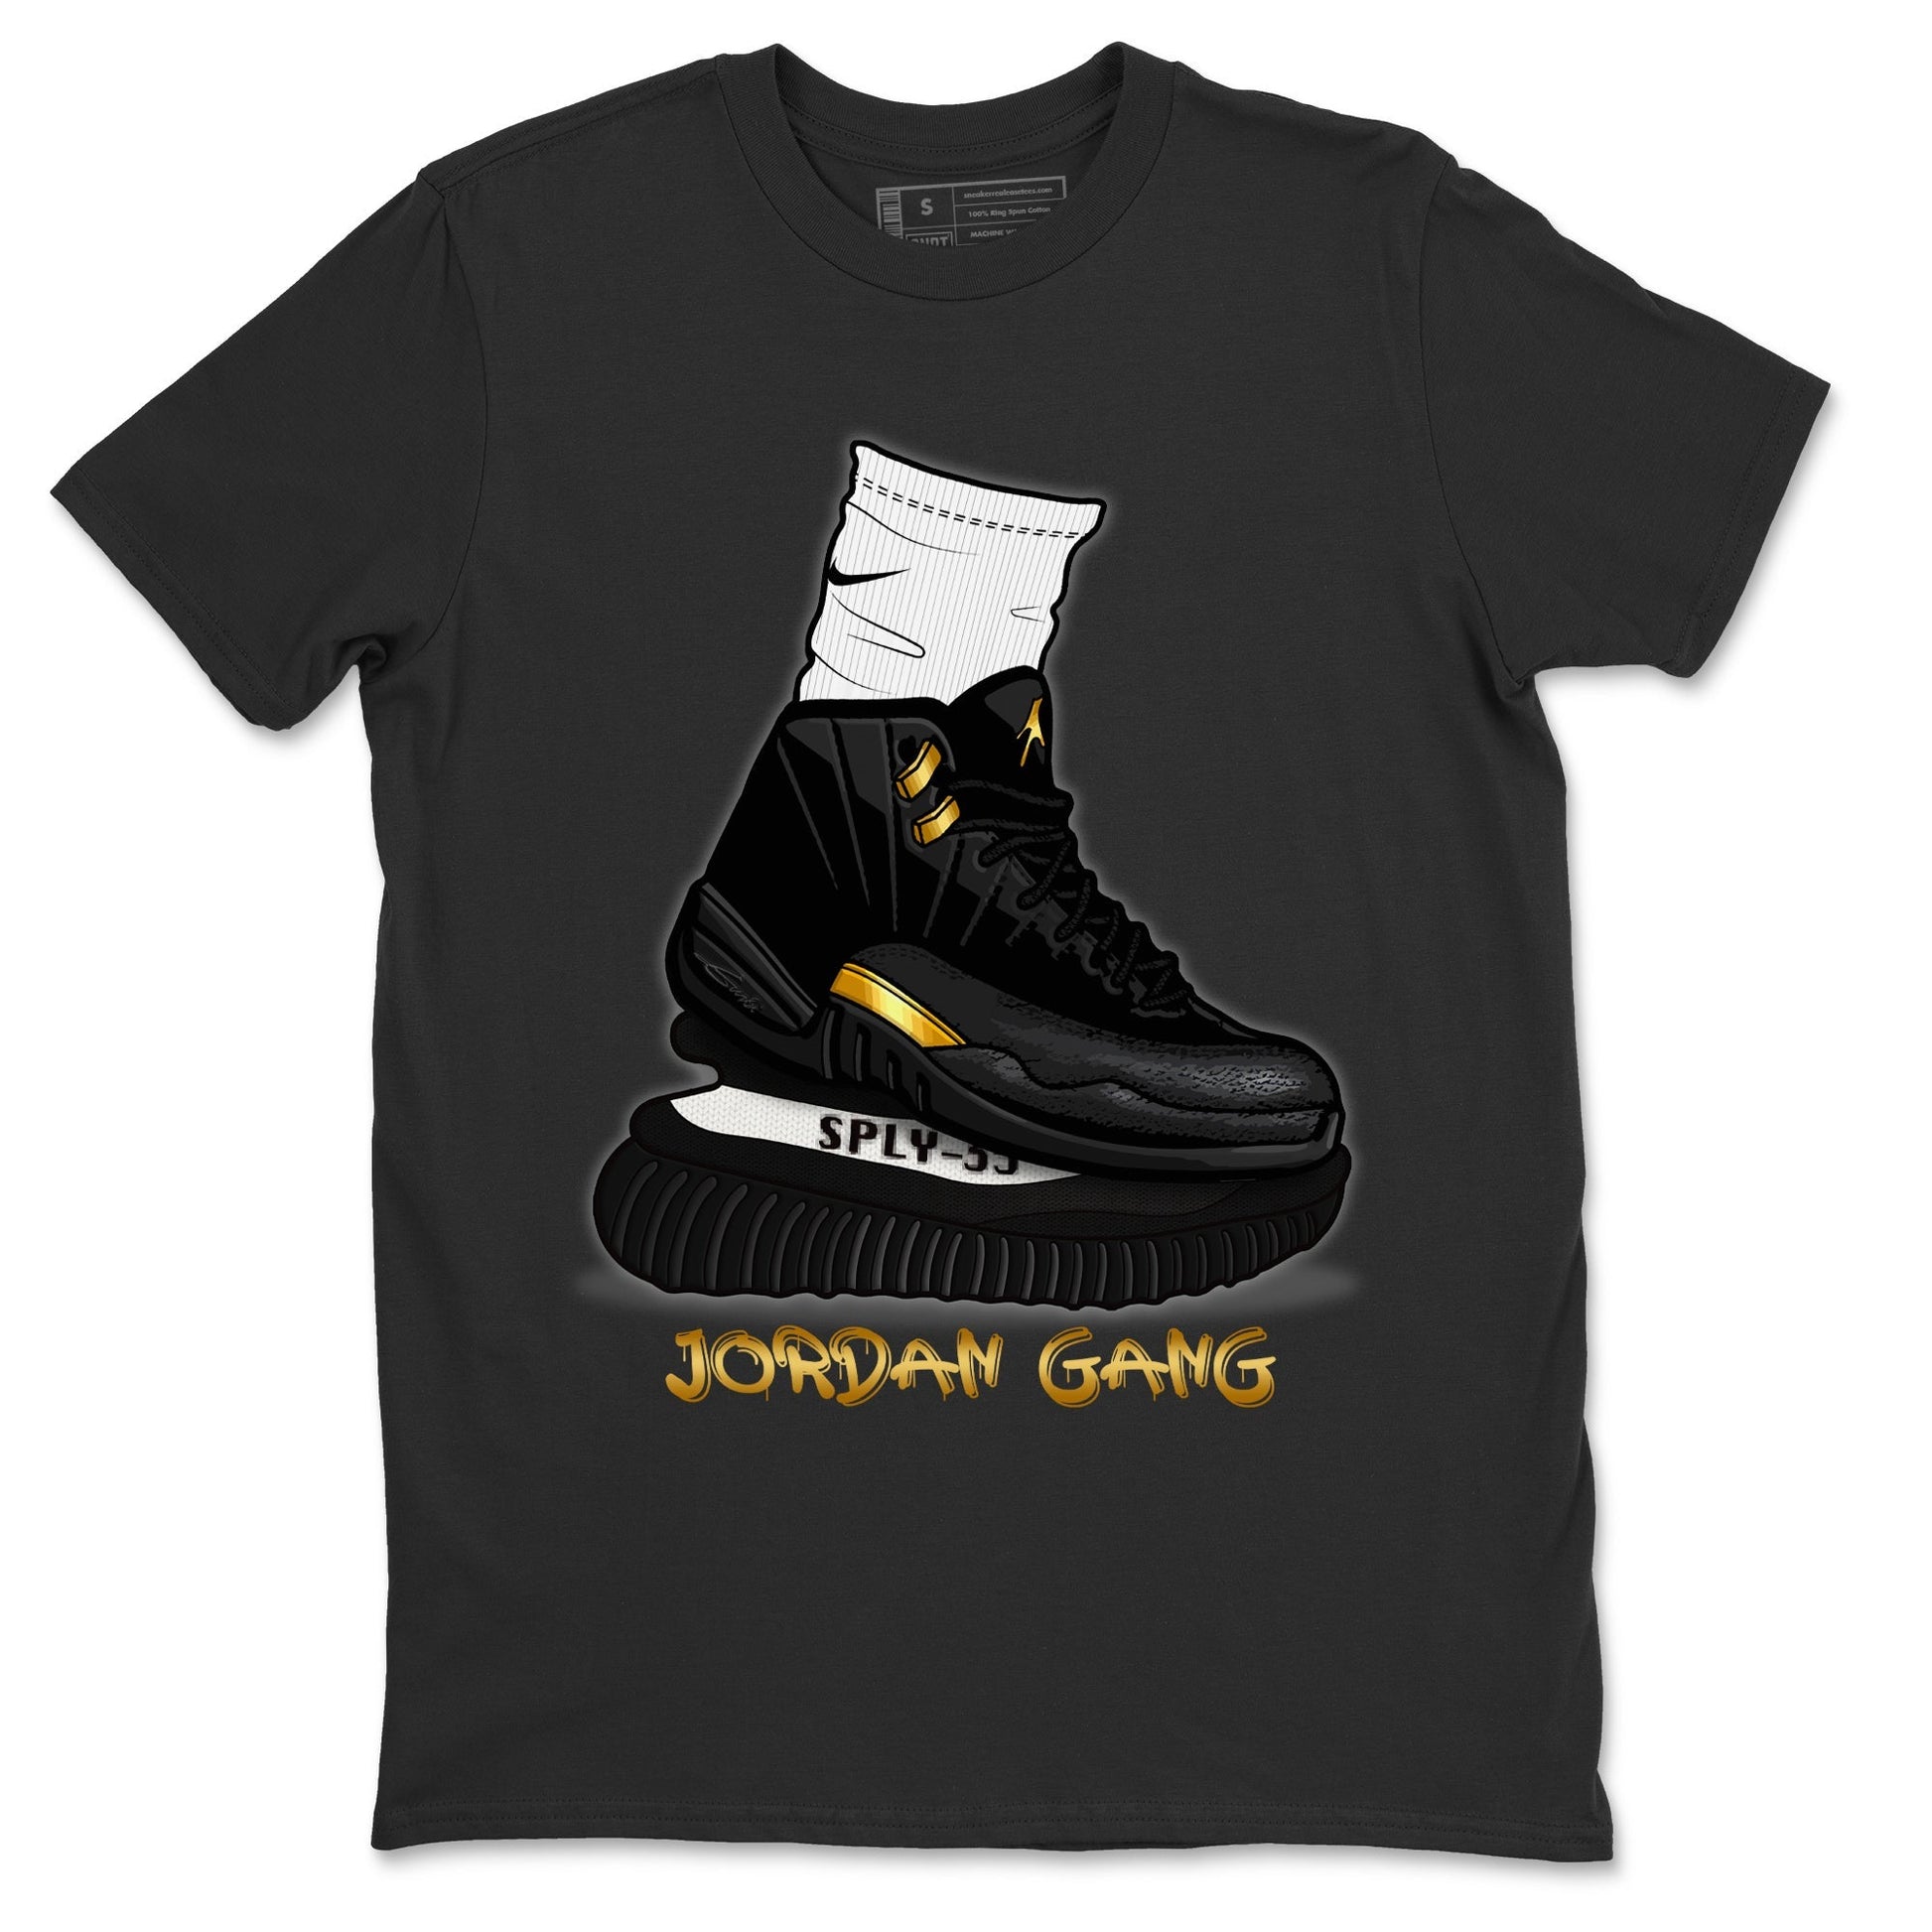 Jordan 12 Black Taxi Sneaker Match Tees Jordan Gang Sneaker Tees Jordan 12 Black Taxi Sneaker Release Tees Unisex Shirts